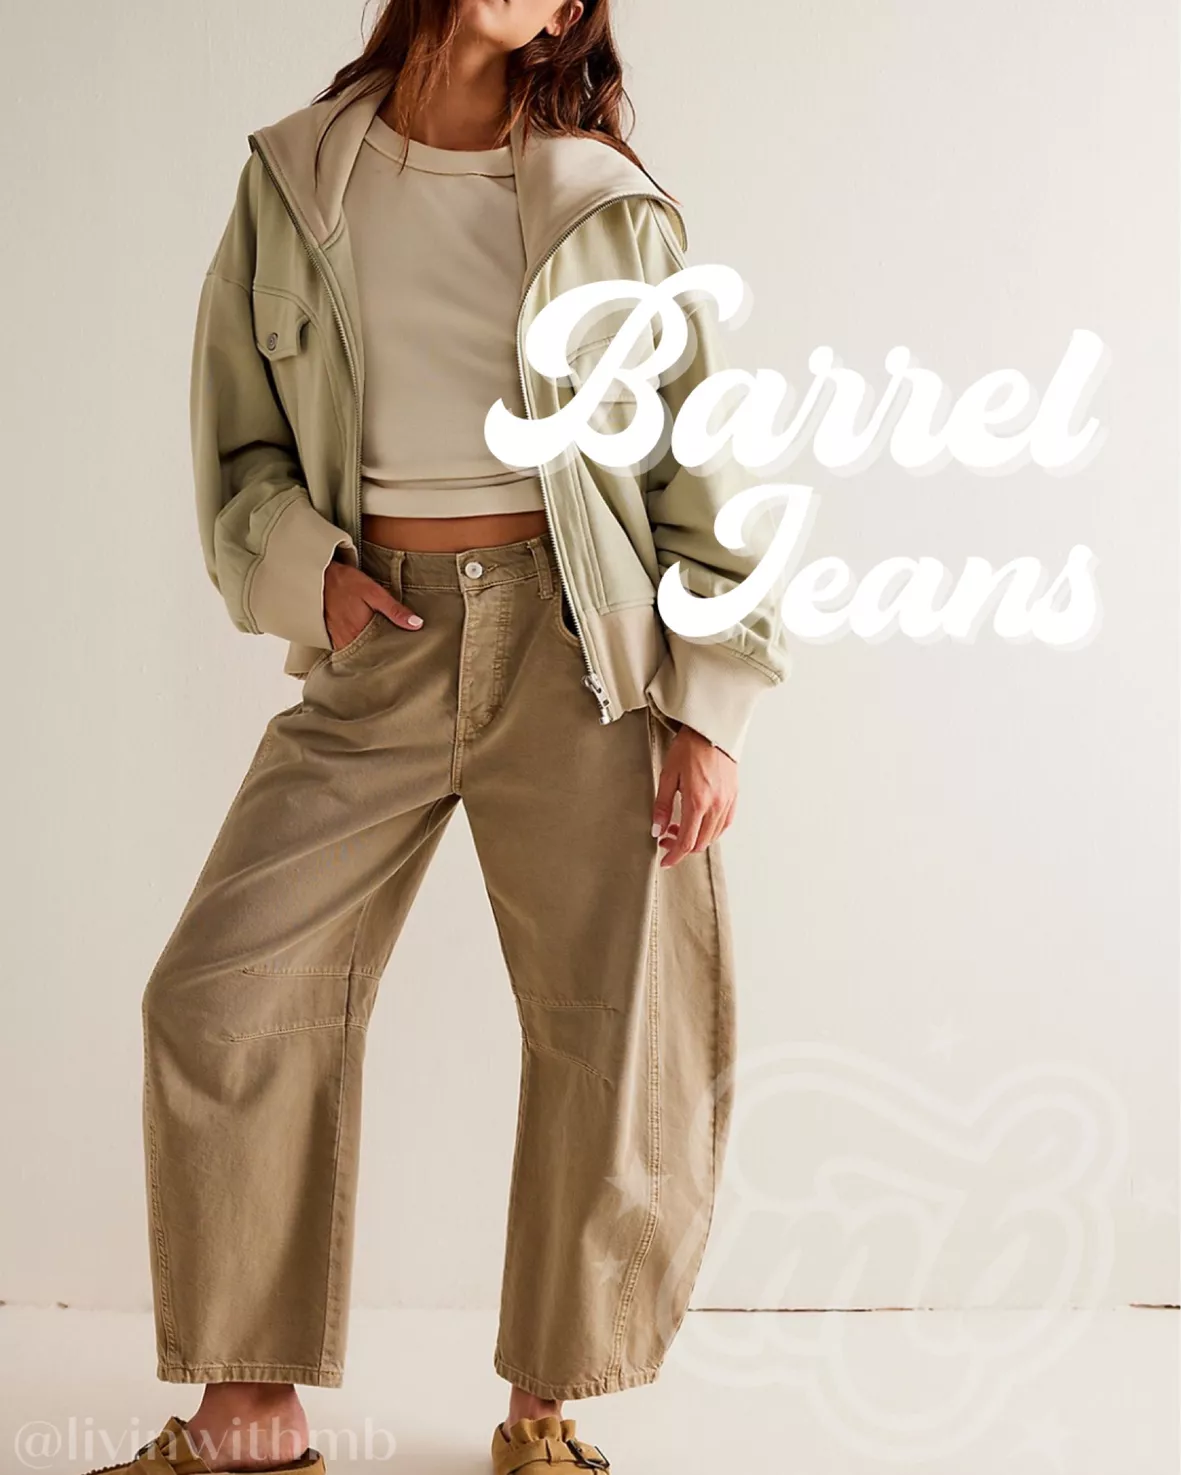 Wrangler Barrel Jeans curated on LTK